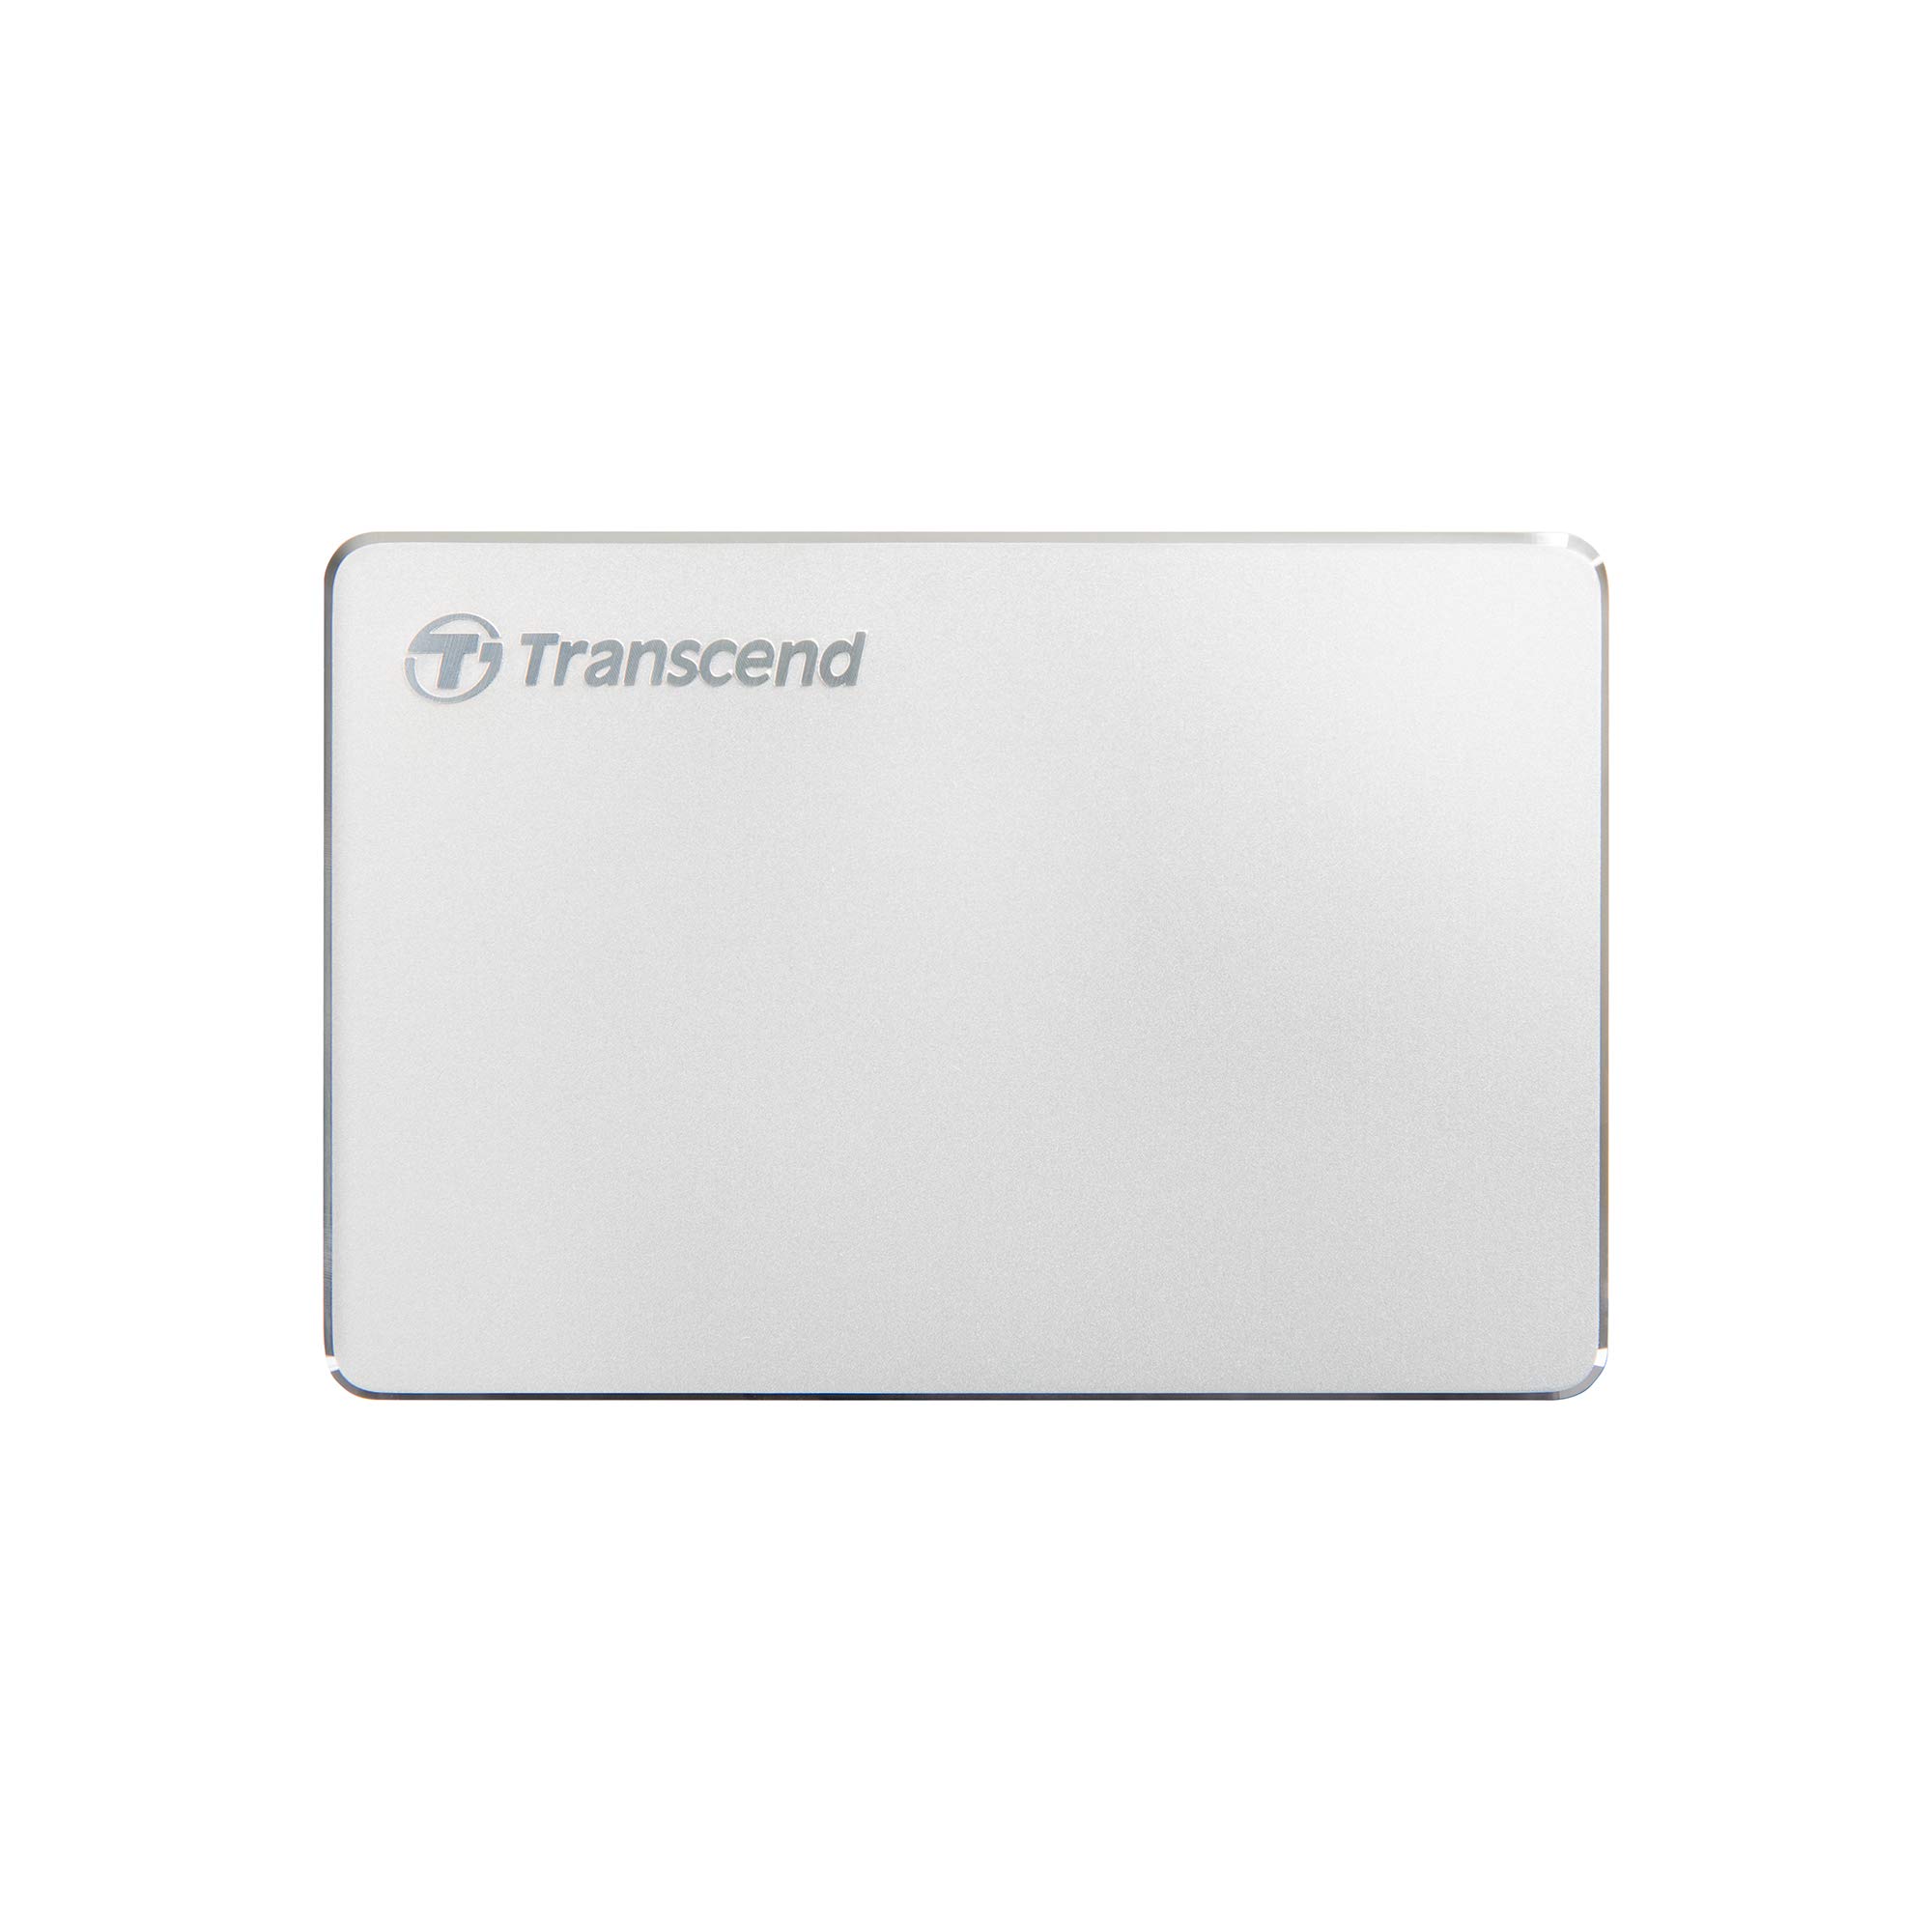 Transcend 2TB StoreJet External Hard Drive 2.5" (TS2TSJ25C3S)